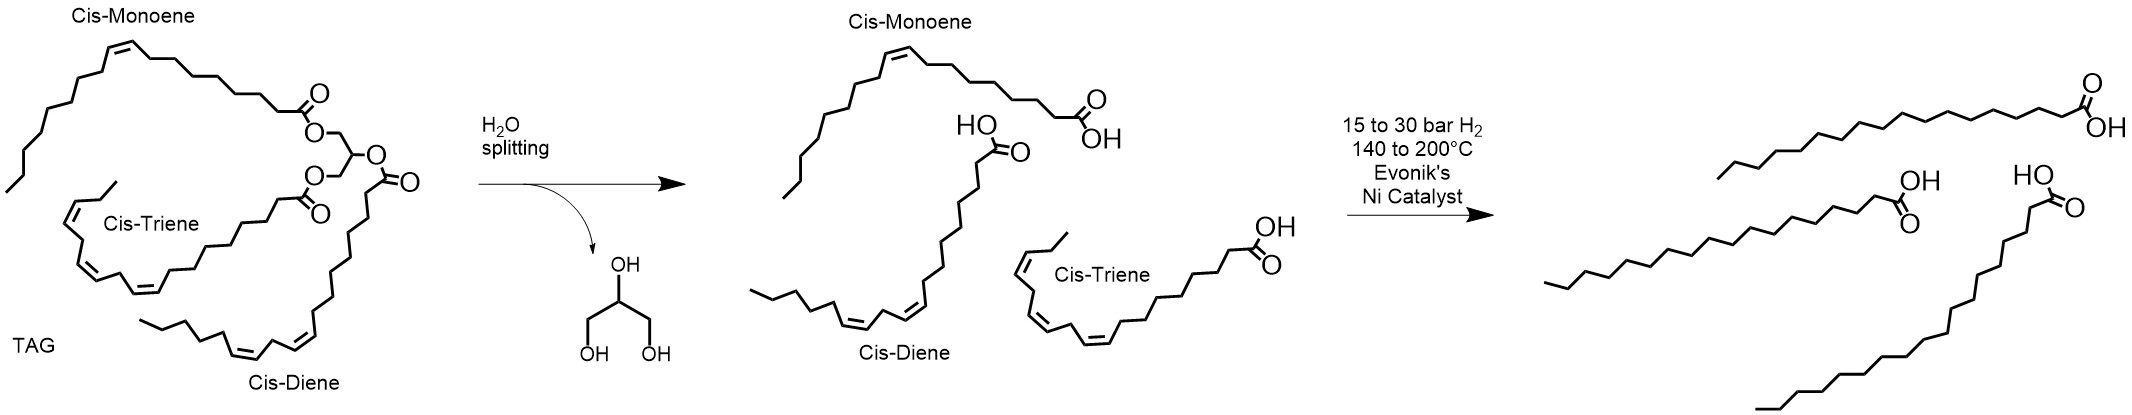 Figure 1. The production of fully hydrogenated free fatty acids via splitting followed by hydrogenation.